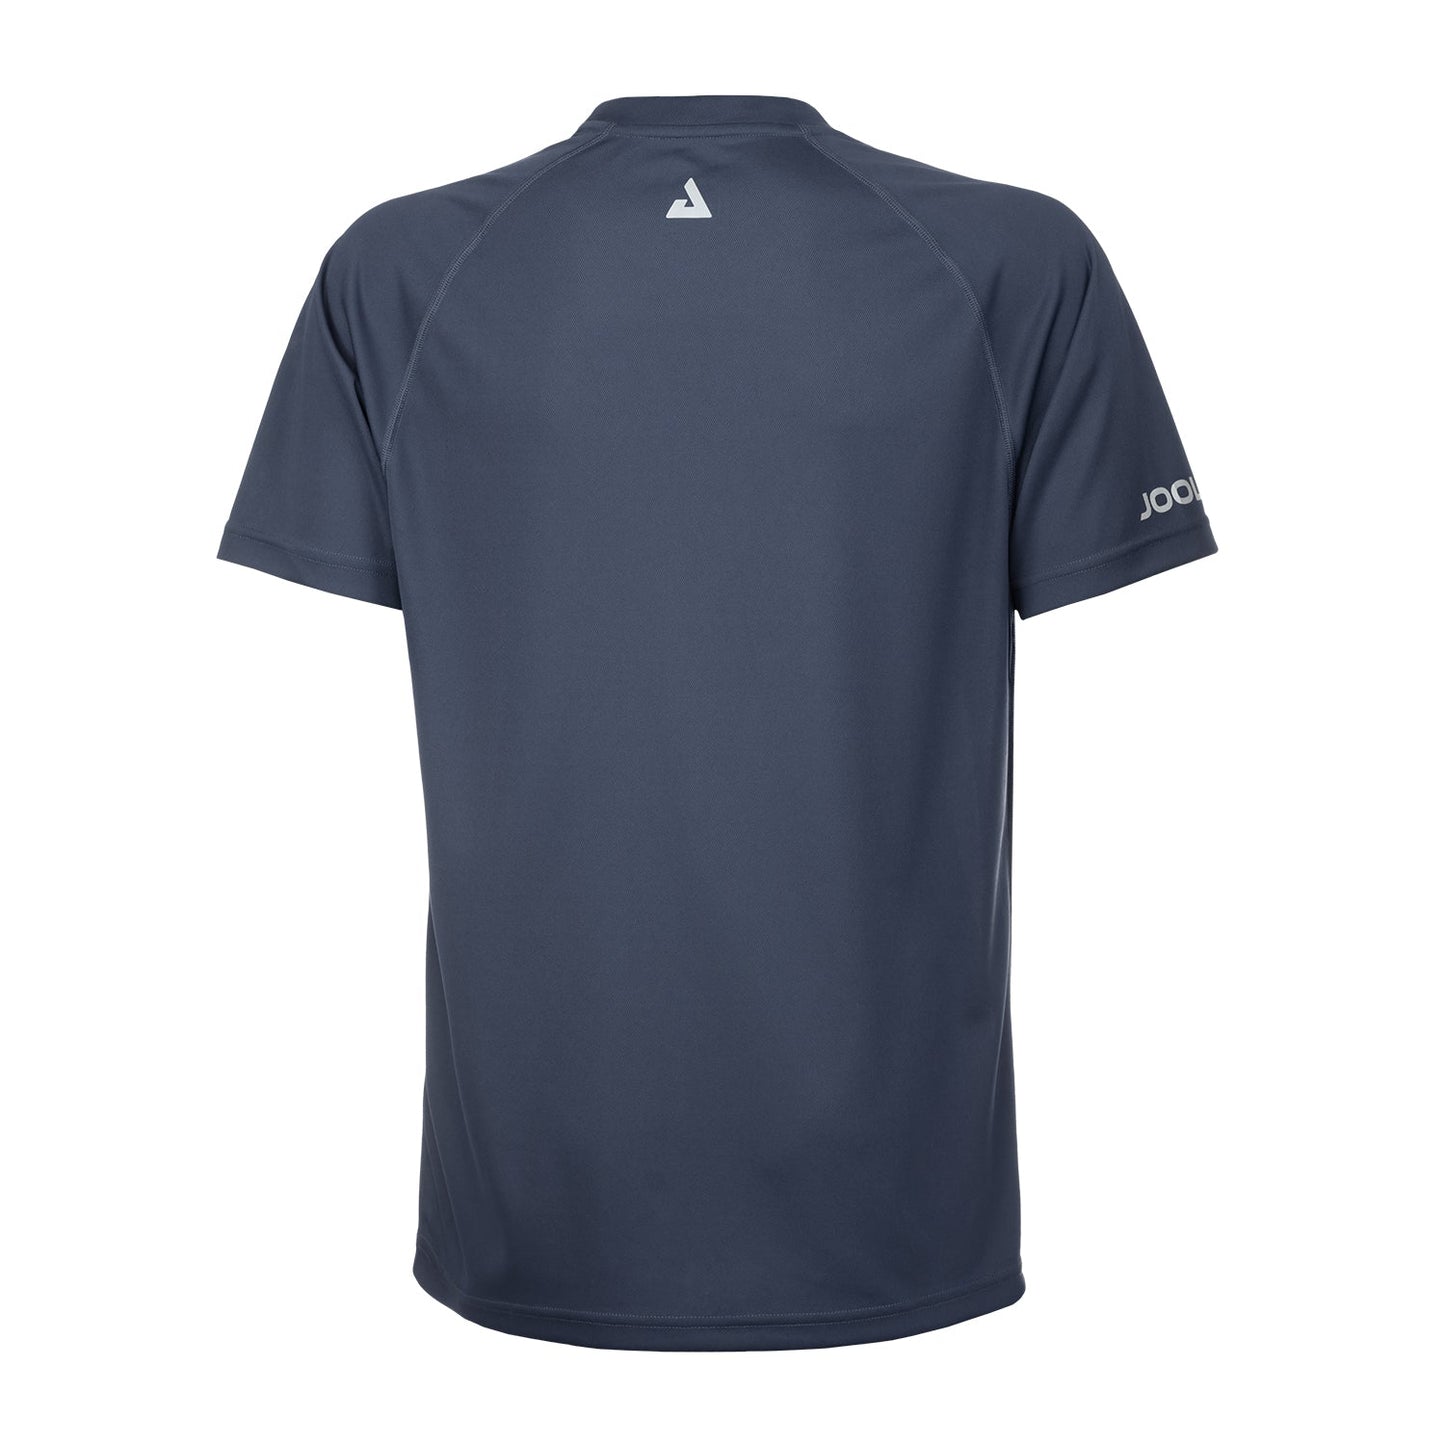 'Joola Shirt Airform Navy